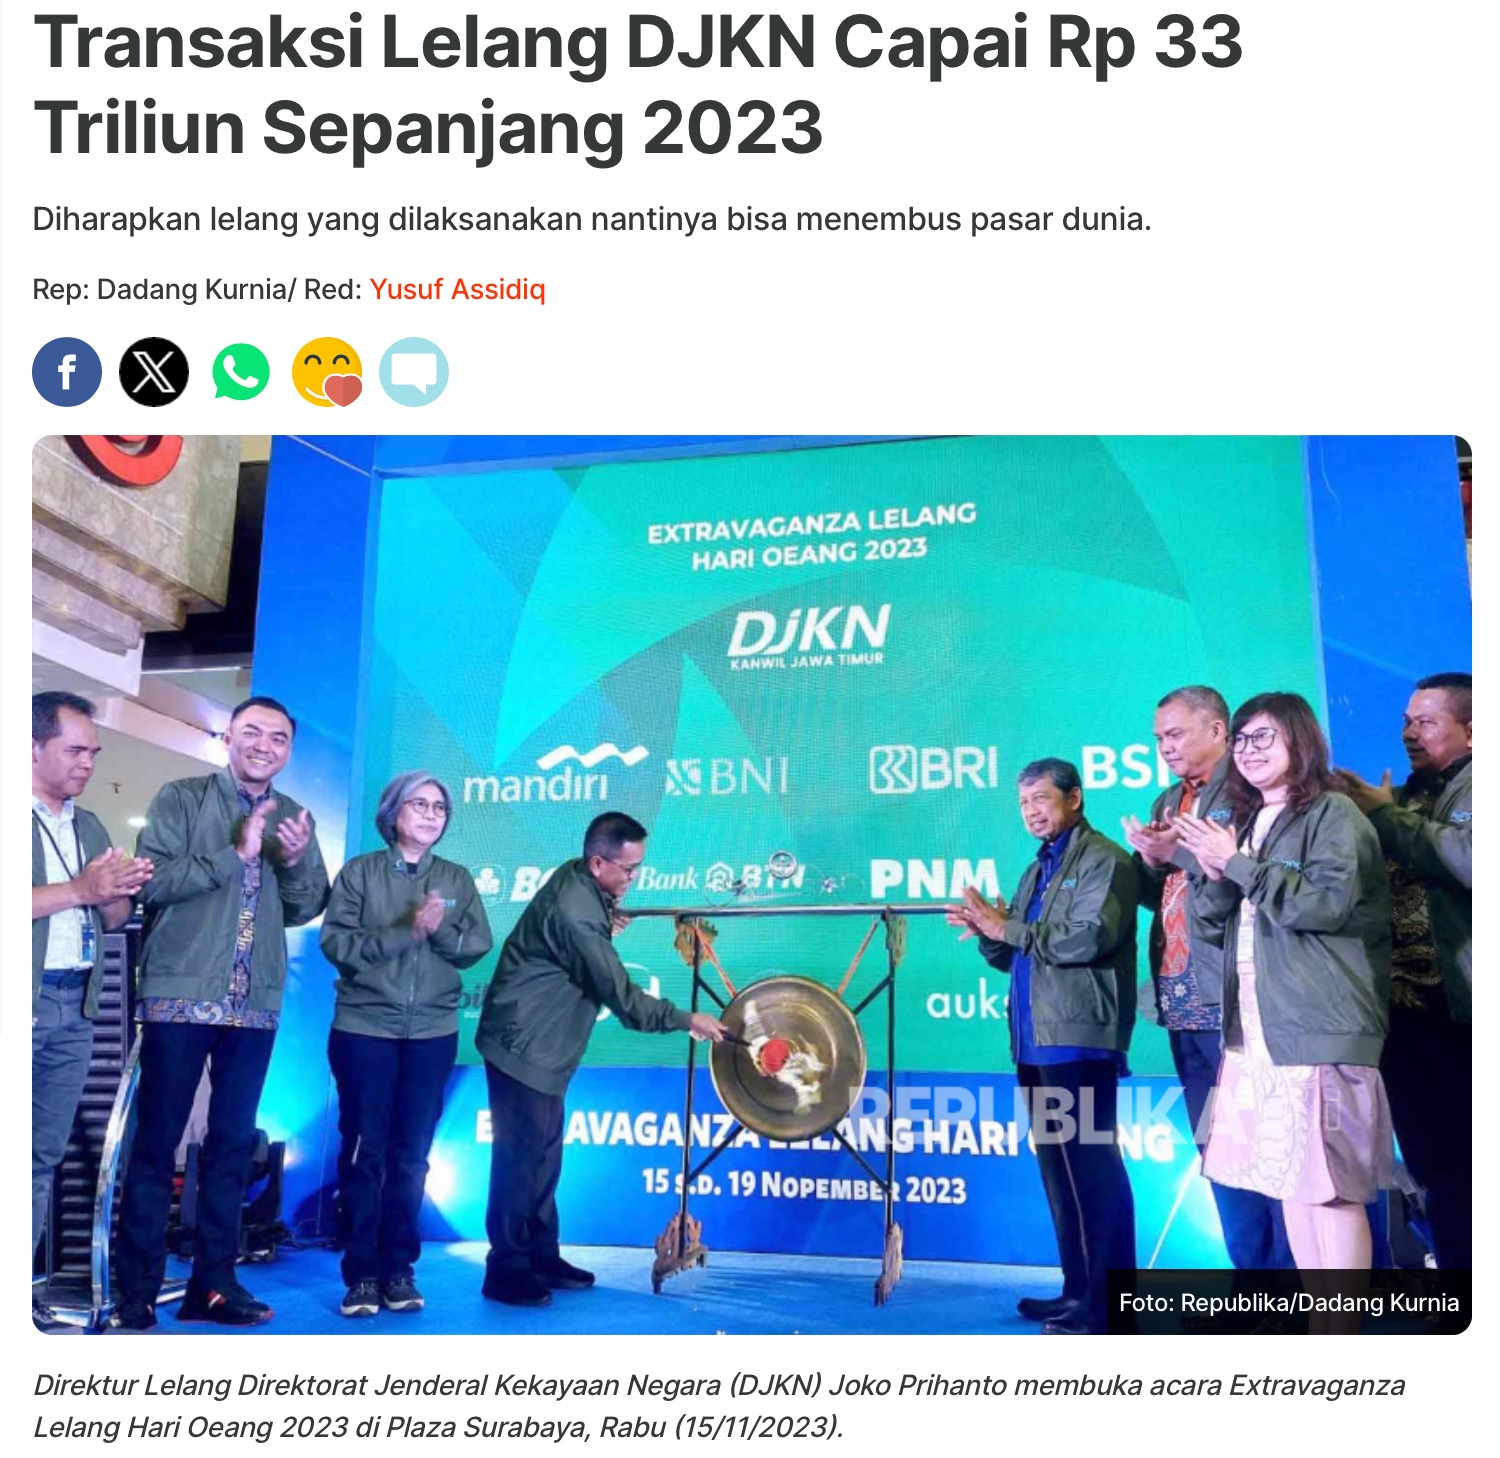 Transaksi Lelang DJKN Capai Rp 33 Triliun Sepanjang 2023